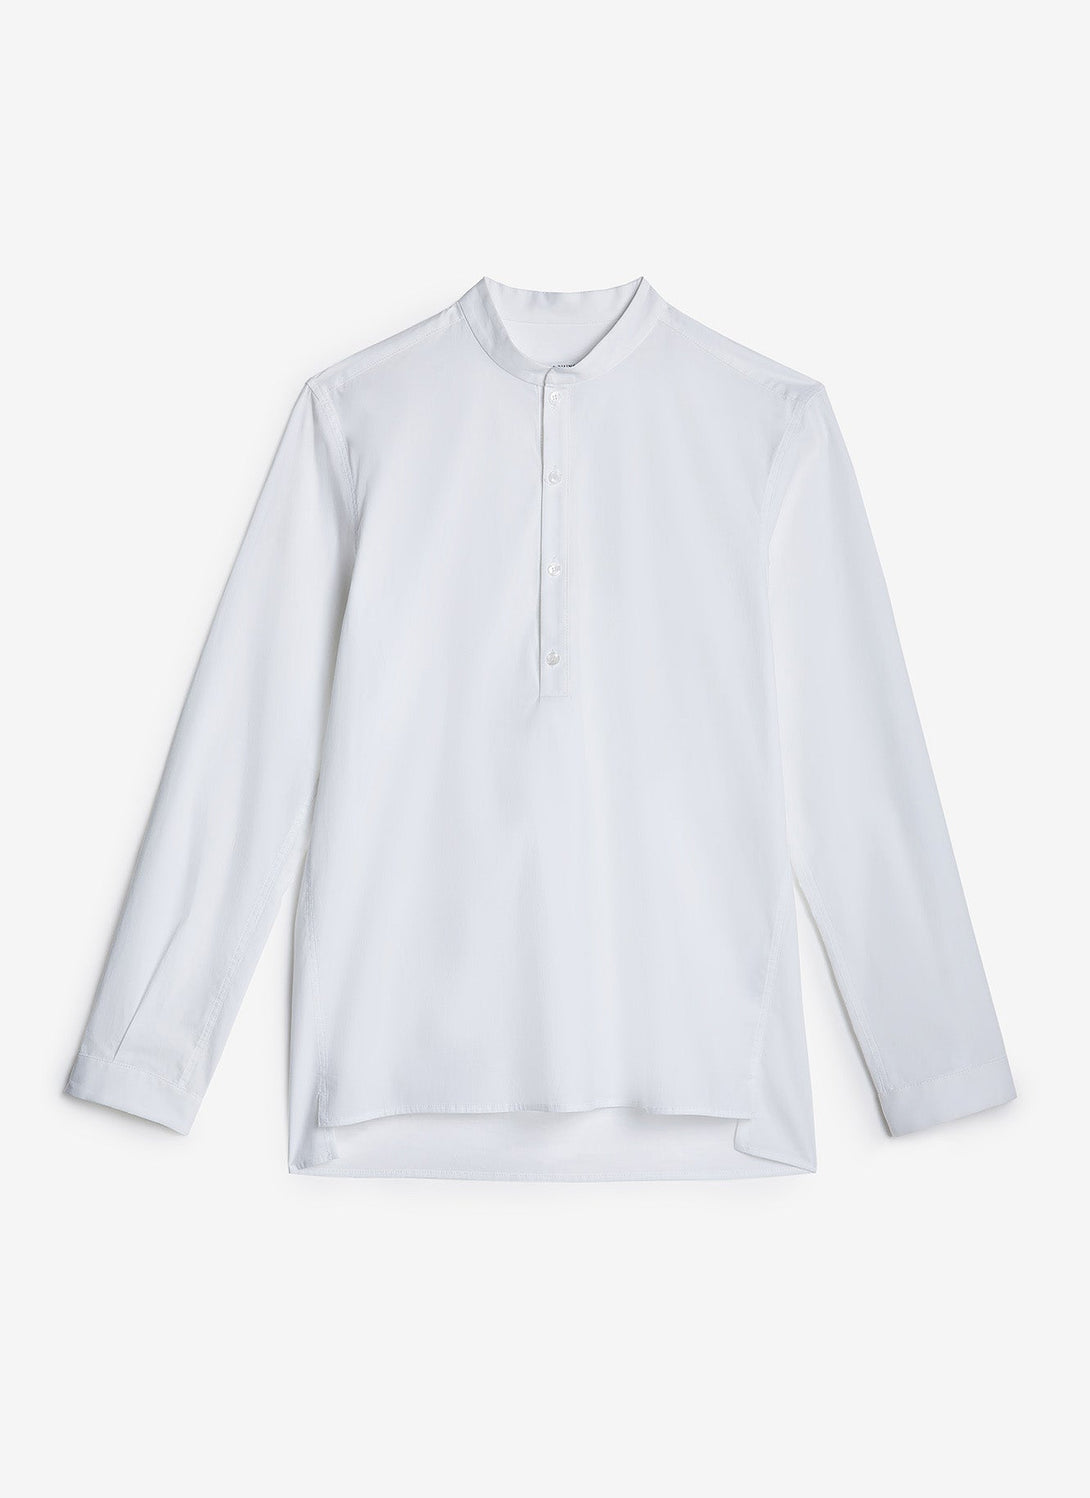 Men Shirt | White Organic Cotton Mandarin Collar Shirt by Spanish designer Adolfo Dominguez